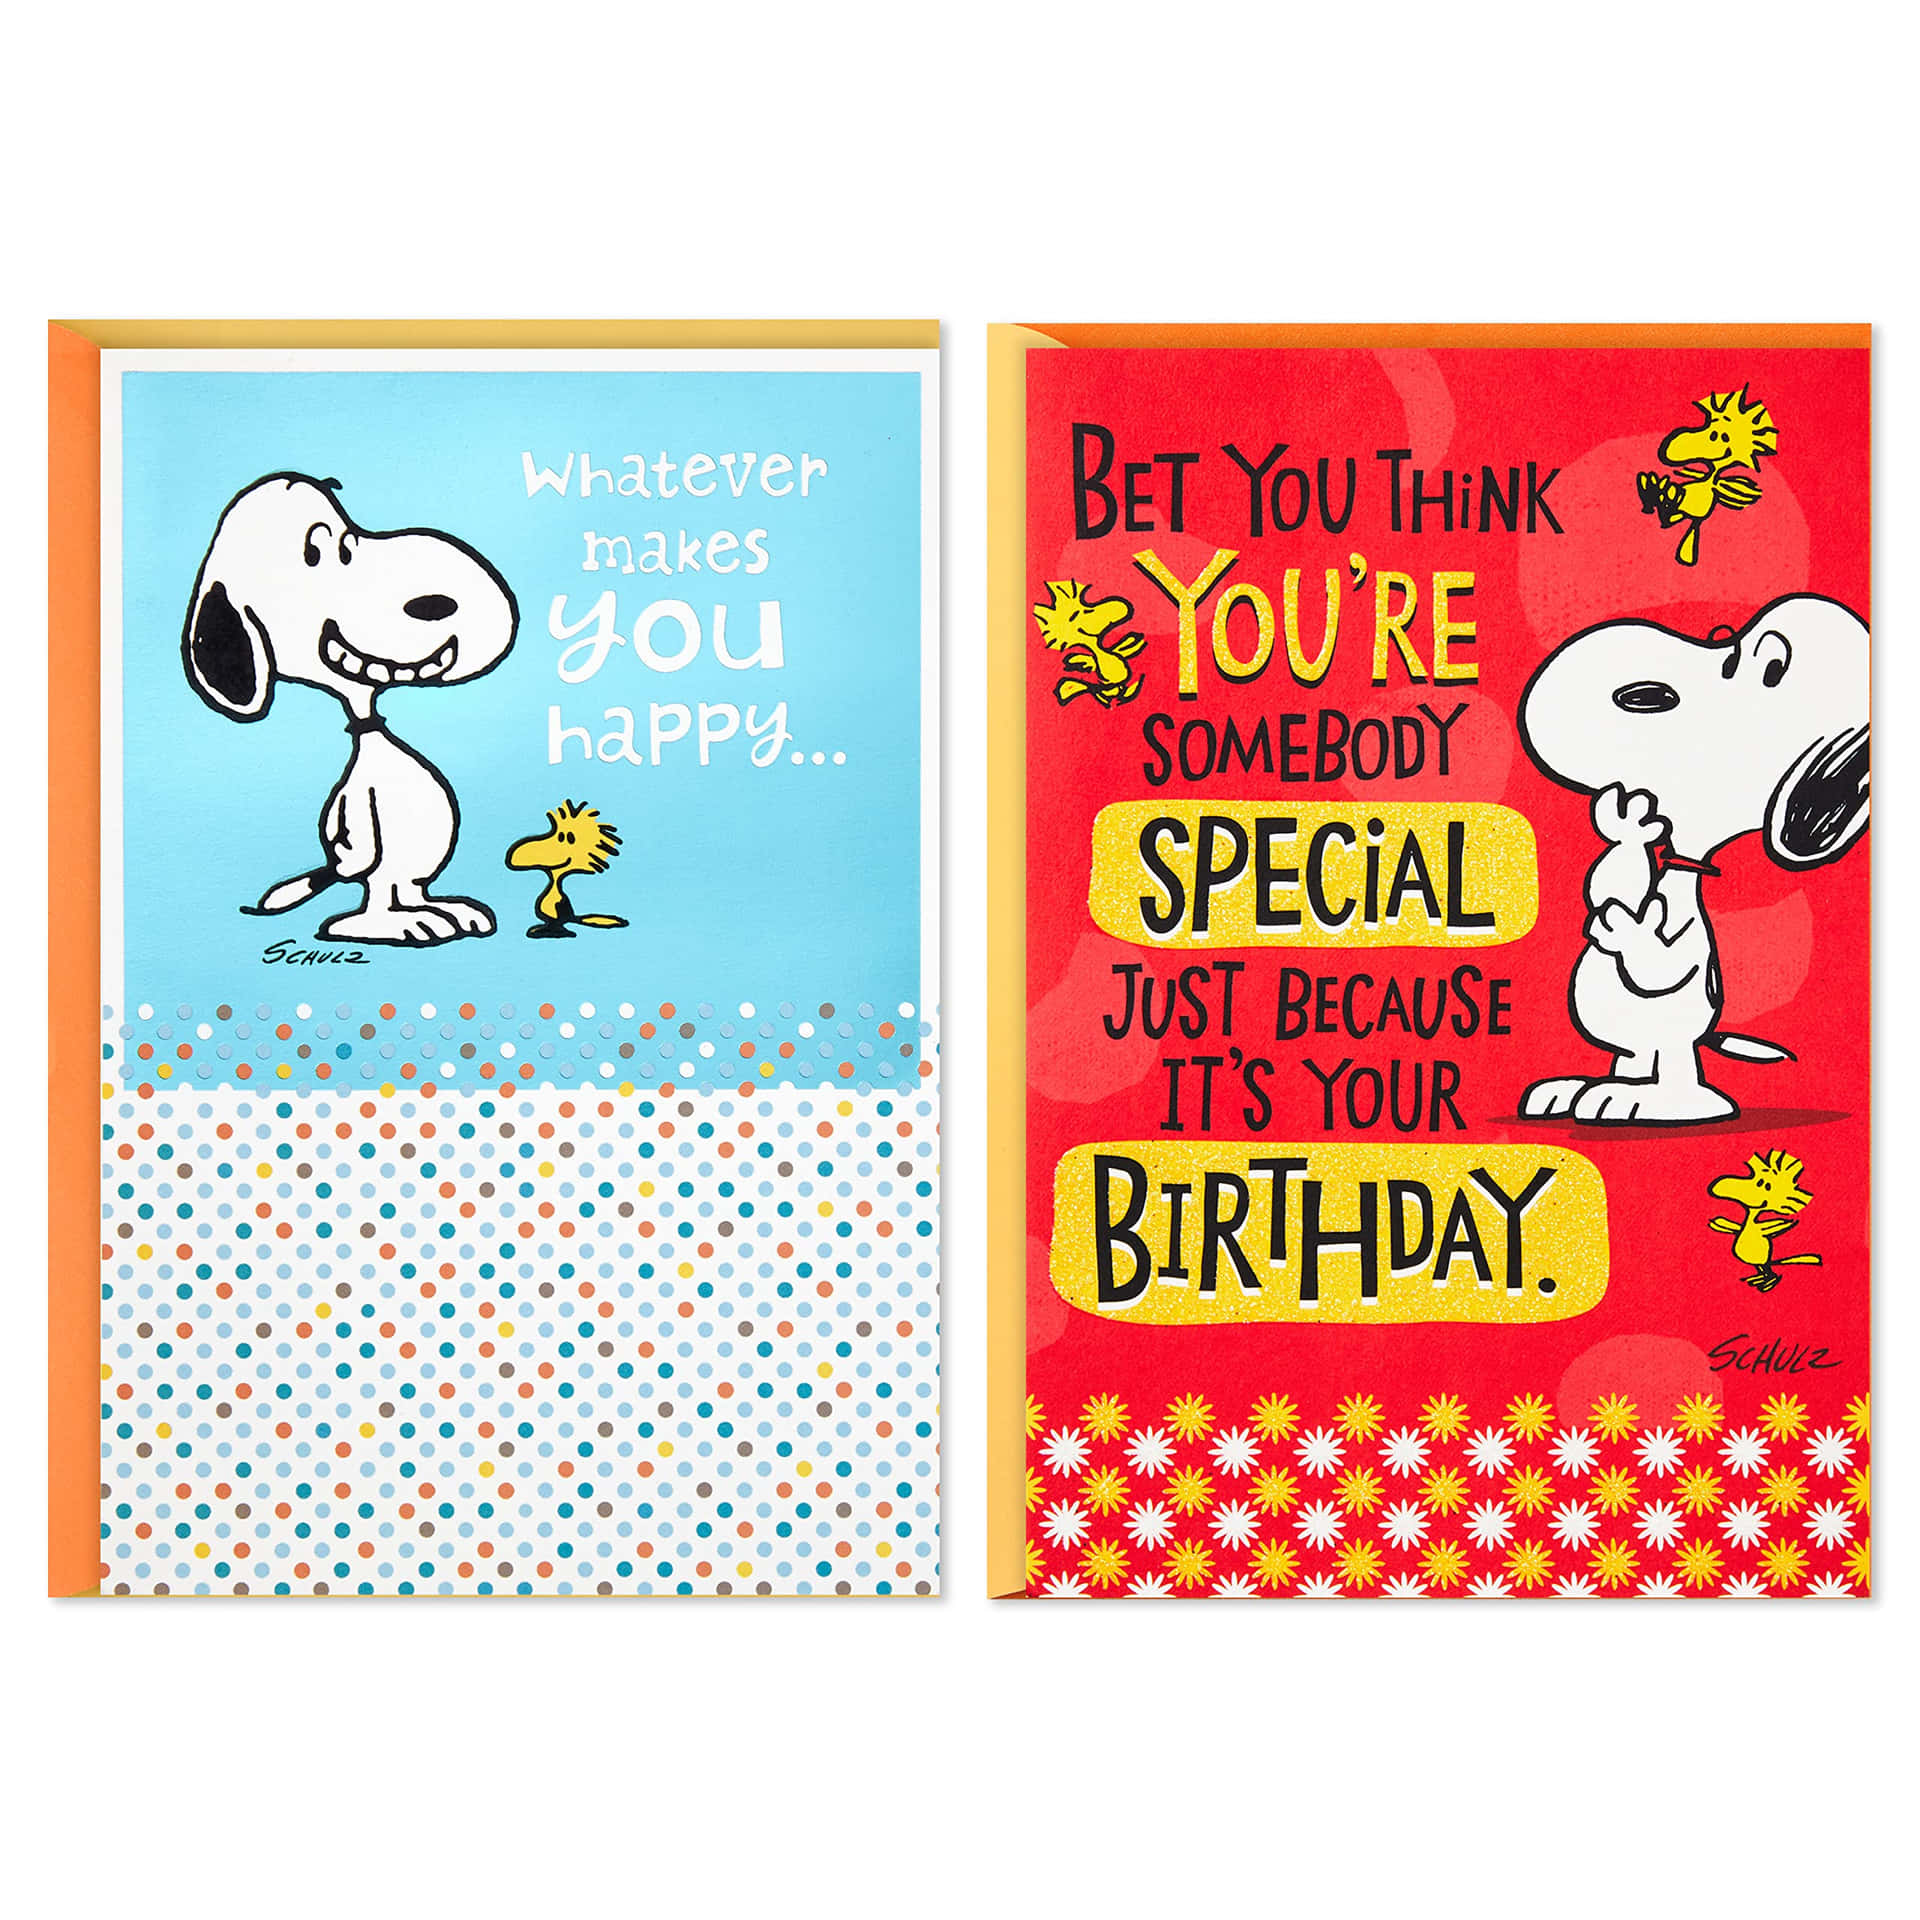 Celebrate Charlie Brown's Birthday! Wallpaper